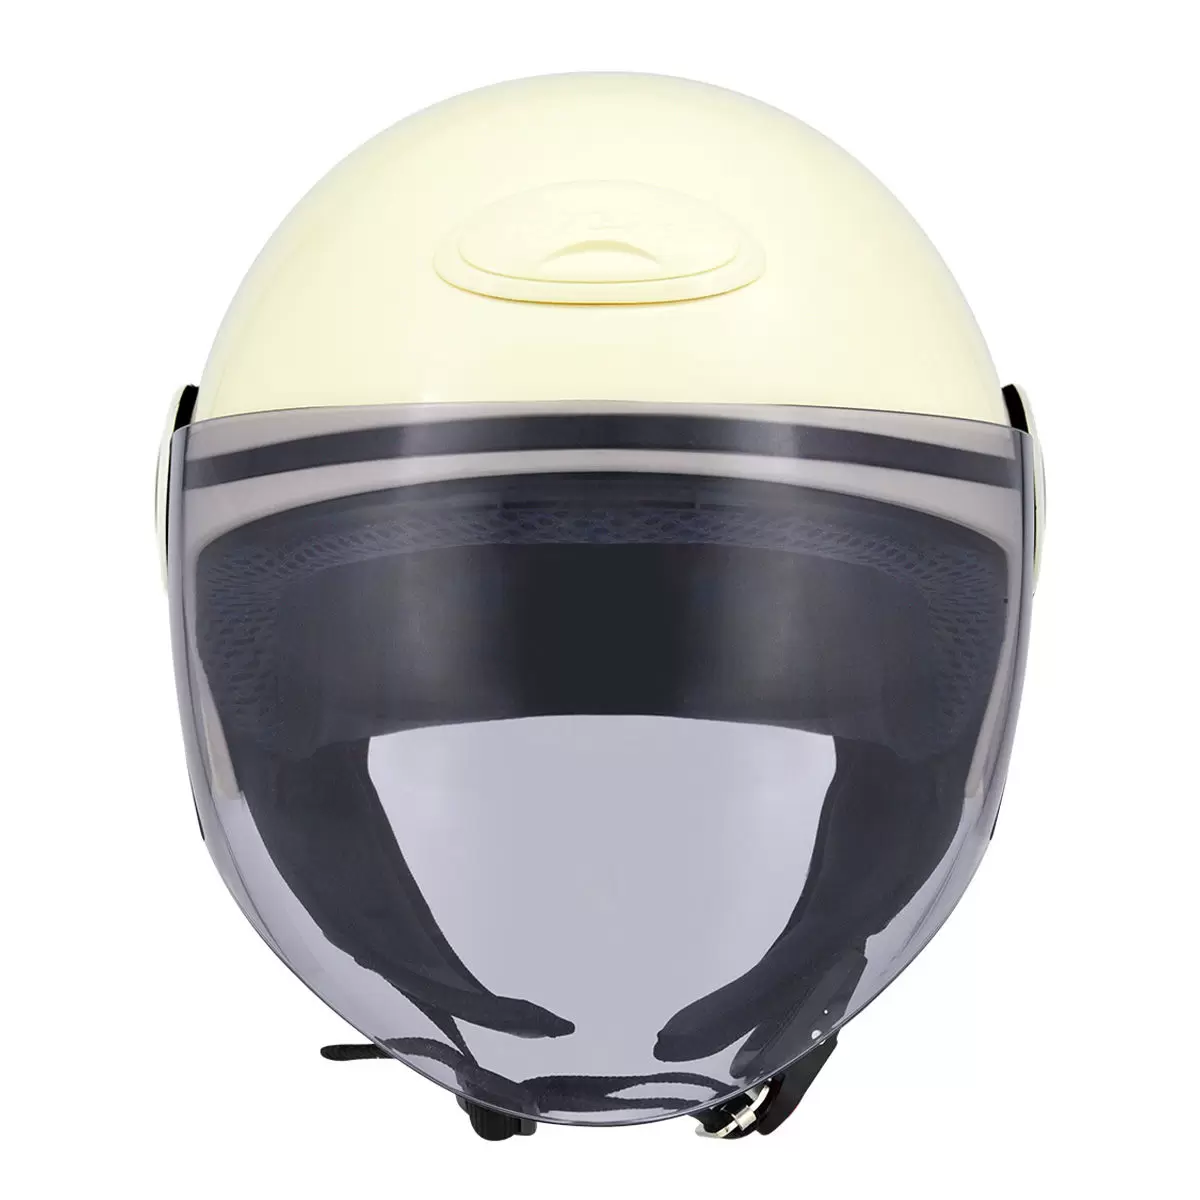 M2R 1/2罩安全帽 騎乘機車用防護頭盔 M-506 亮米 XL